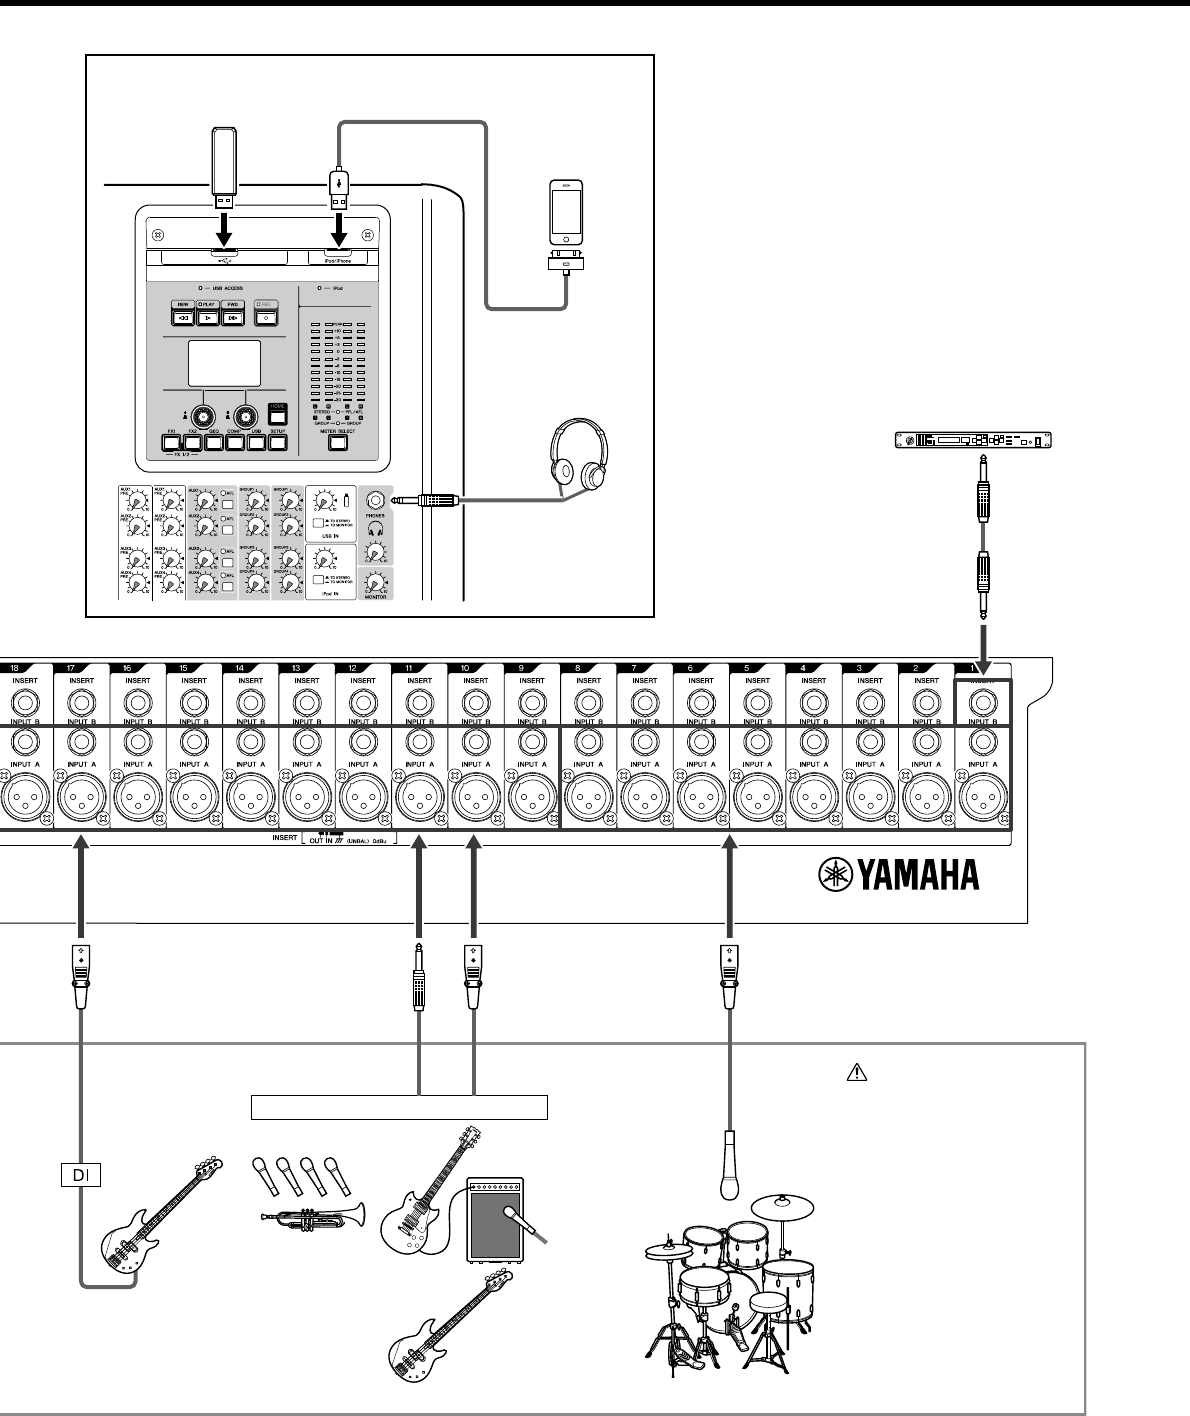 Yamaha MGP32X/MGP24X Owner’s Manual Owner's Mgp32x En Om C0